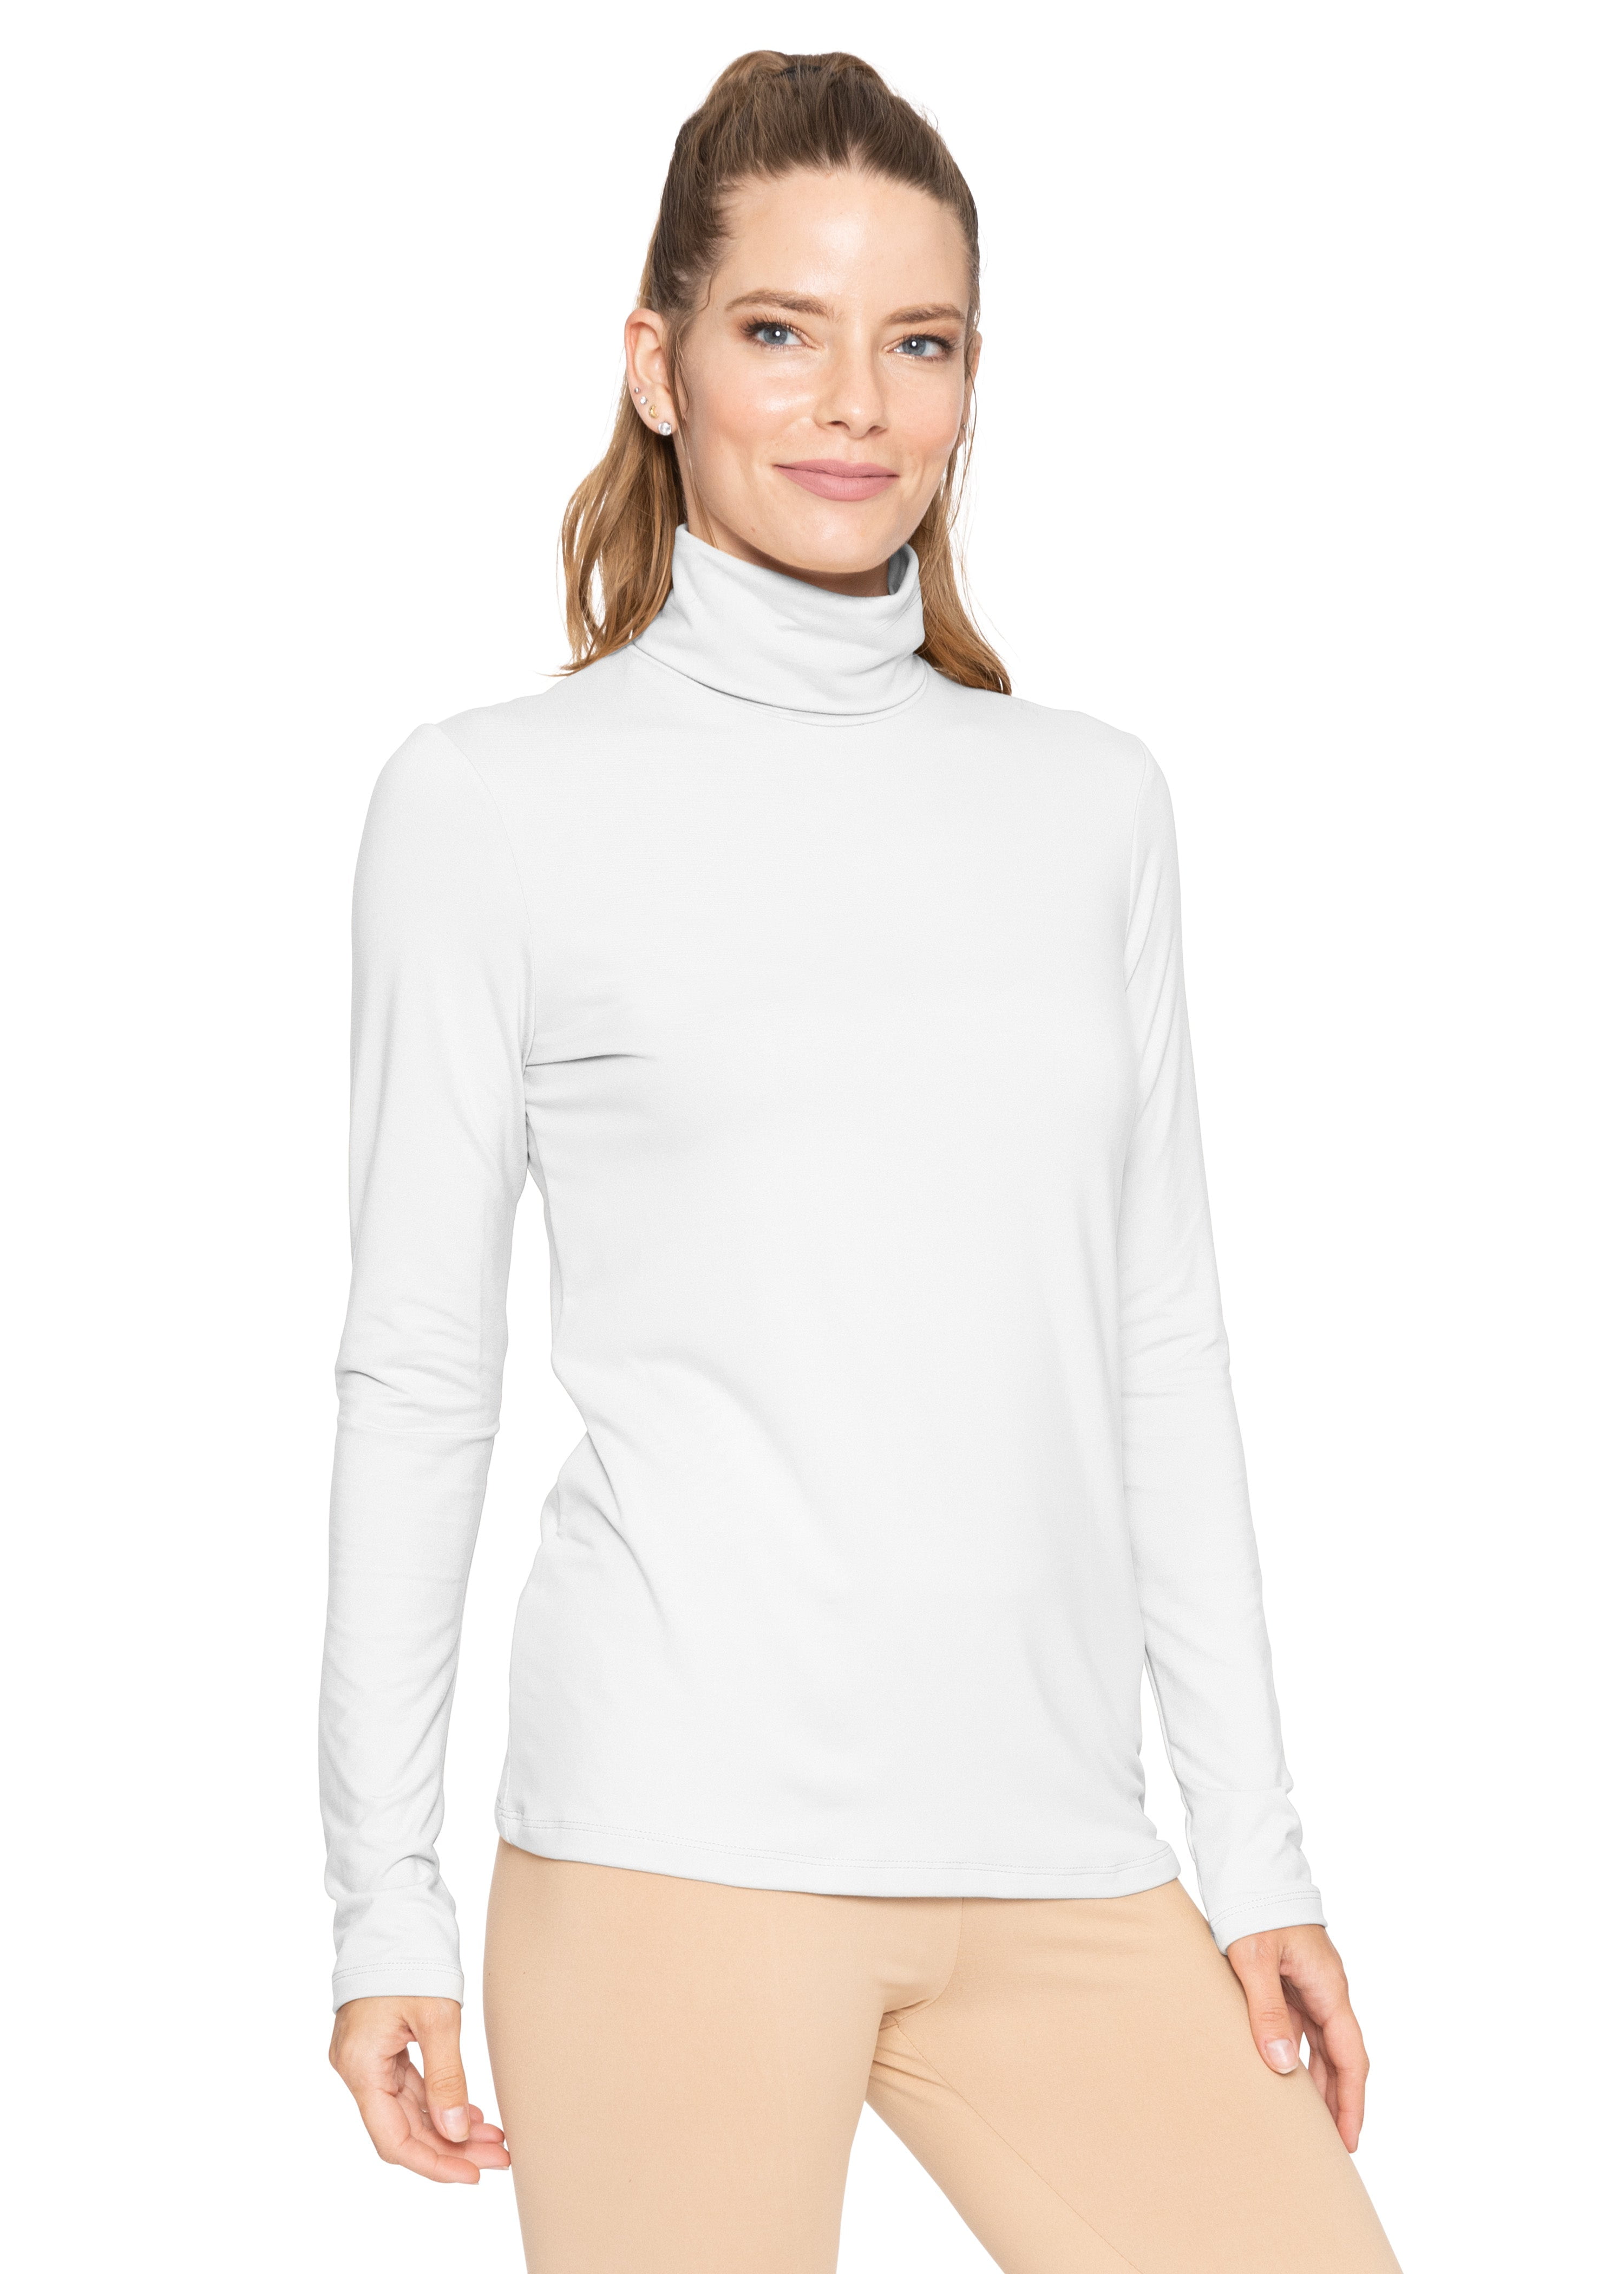 Garderobe udledning Ringlet Stretch Is Comfort Women's Warm Long Sleeve Turtleneck Top | Ultra Soft |  Adult Xsmall-Large - Walmart.com